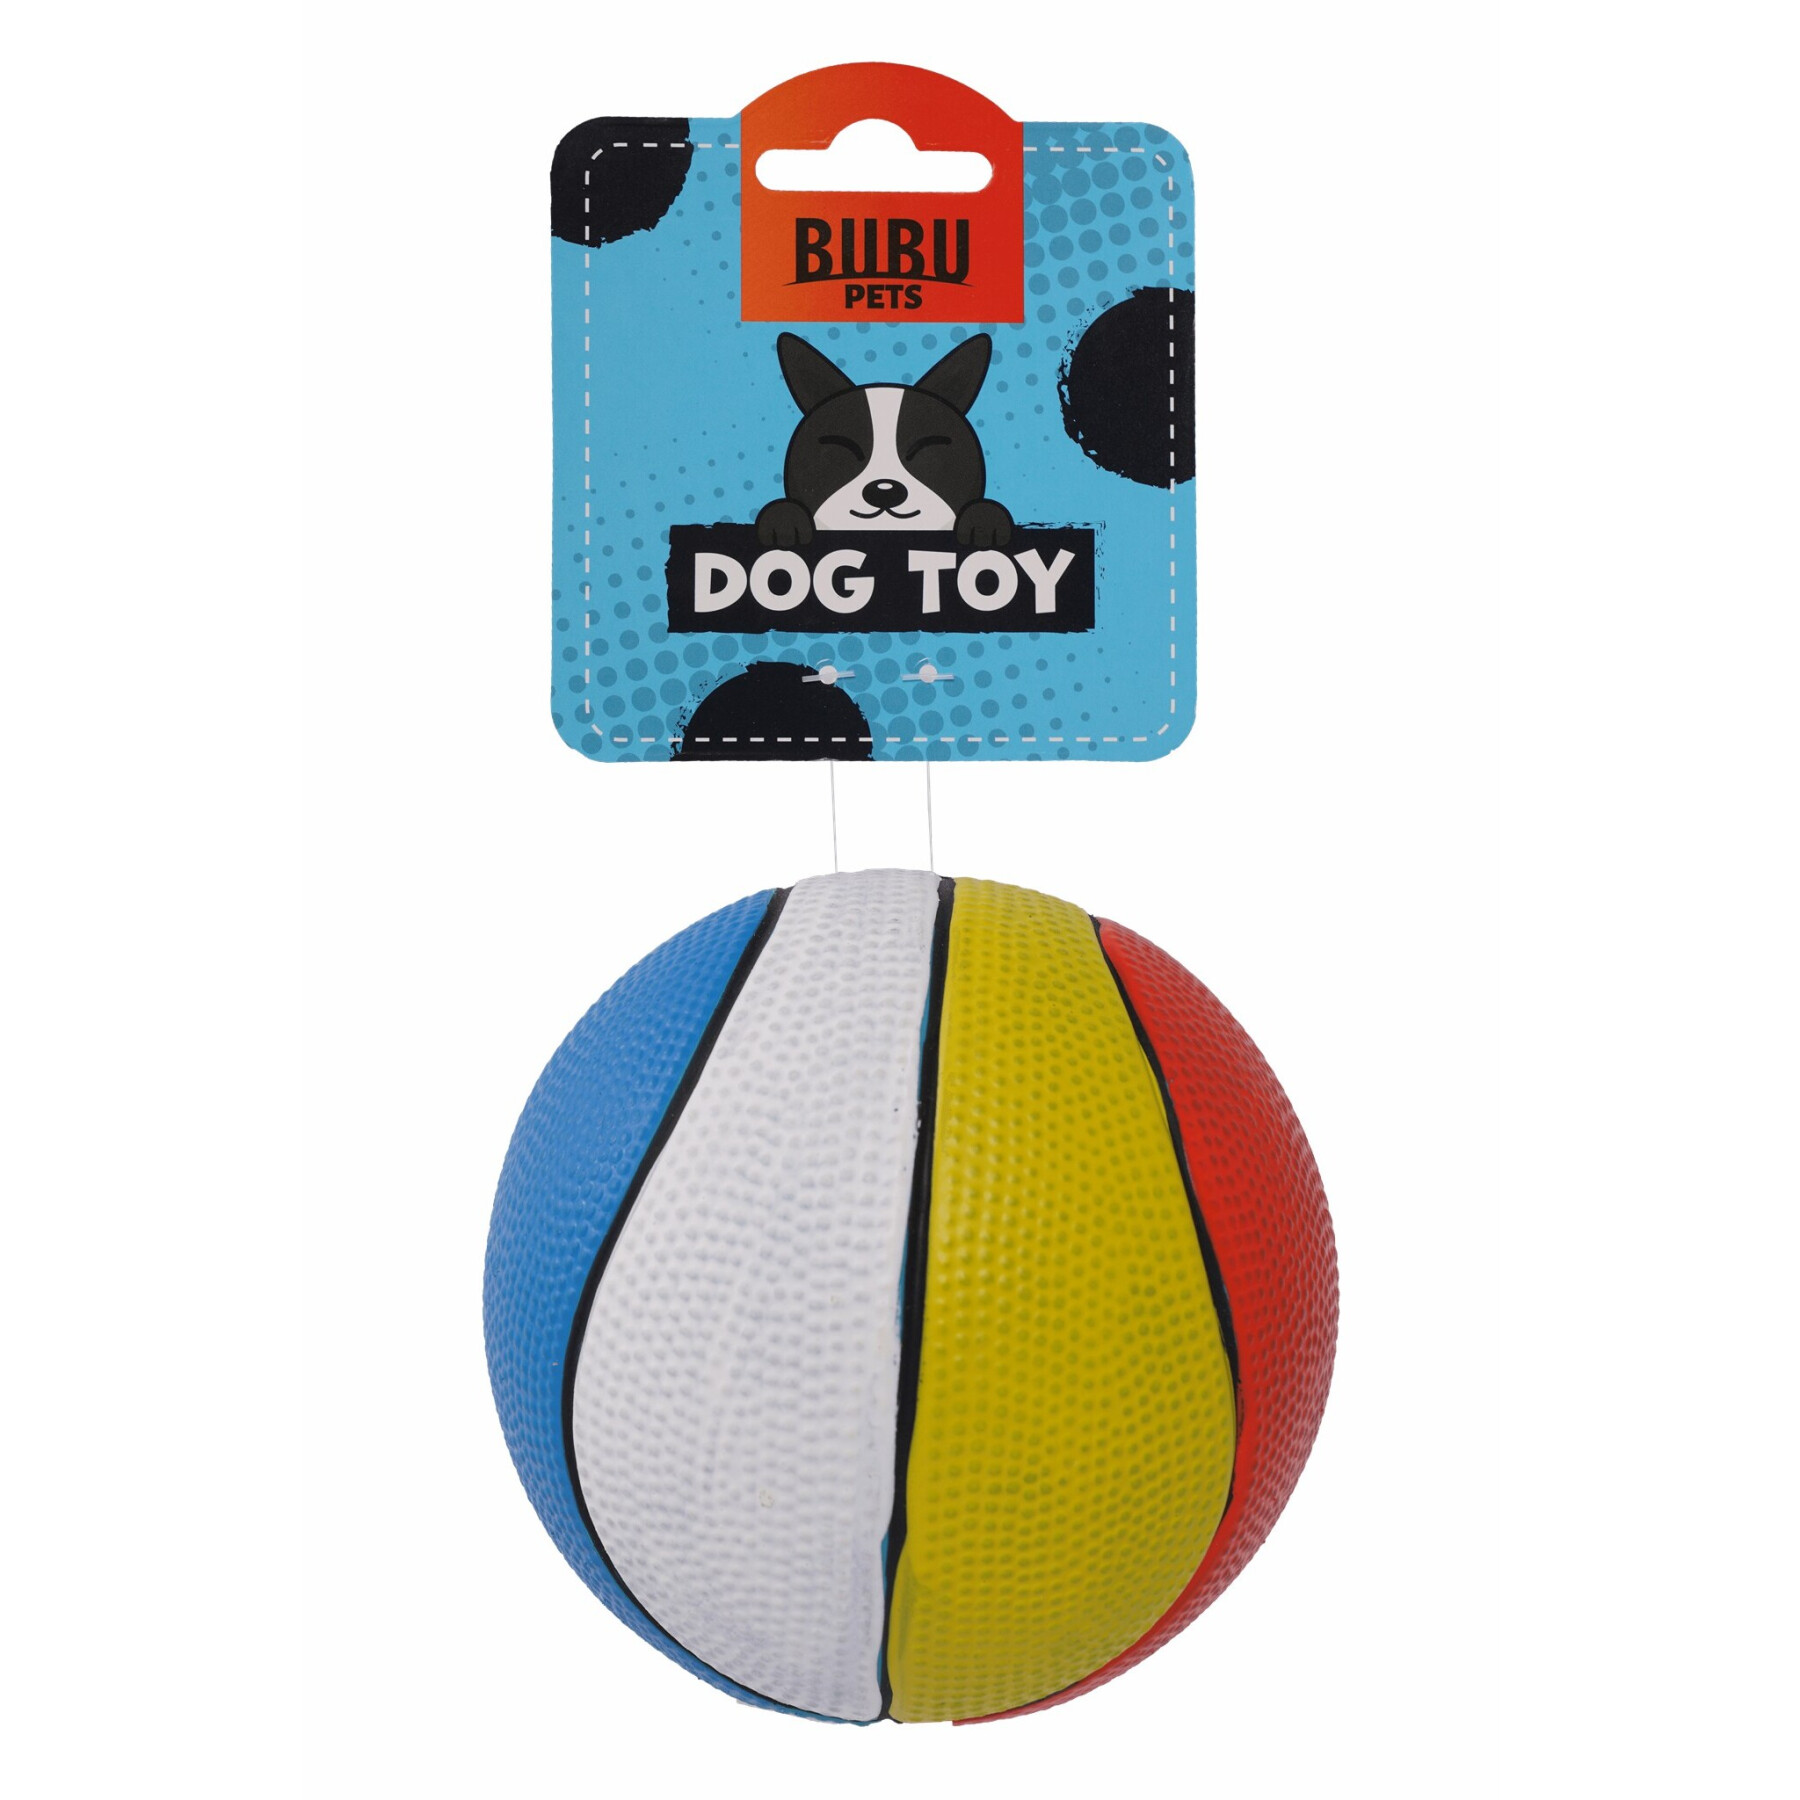 Juguete de látex con pelota deportiva para perros BUBU Pets